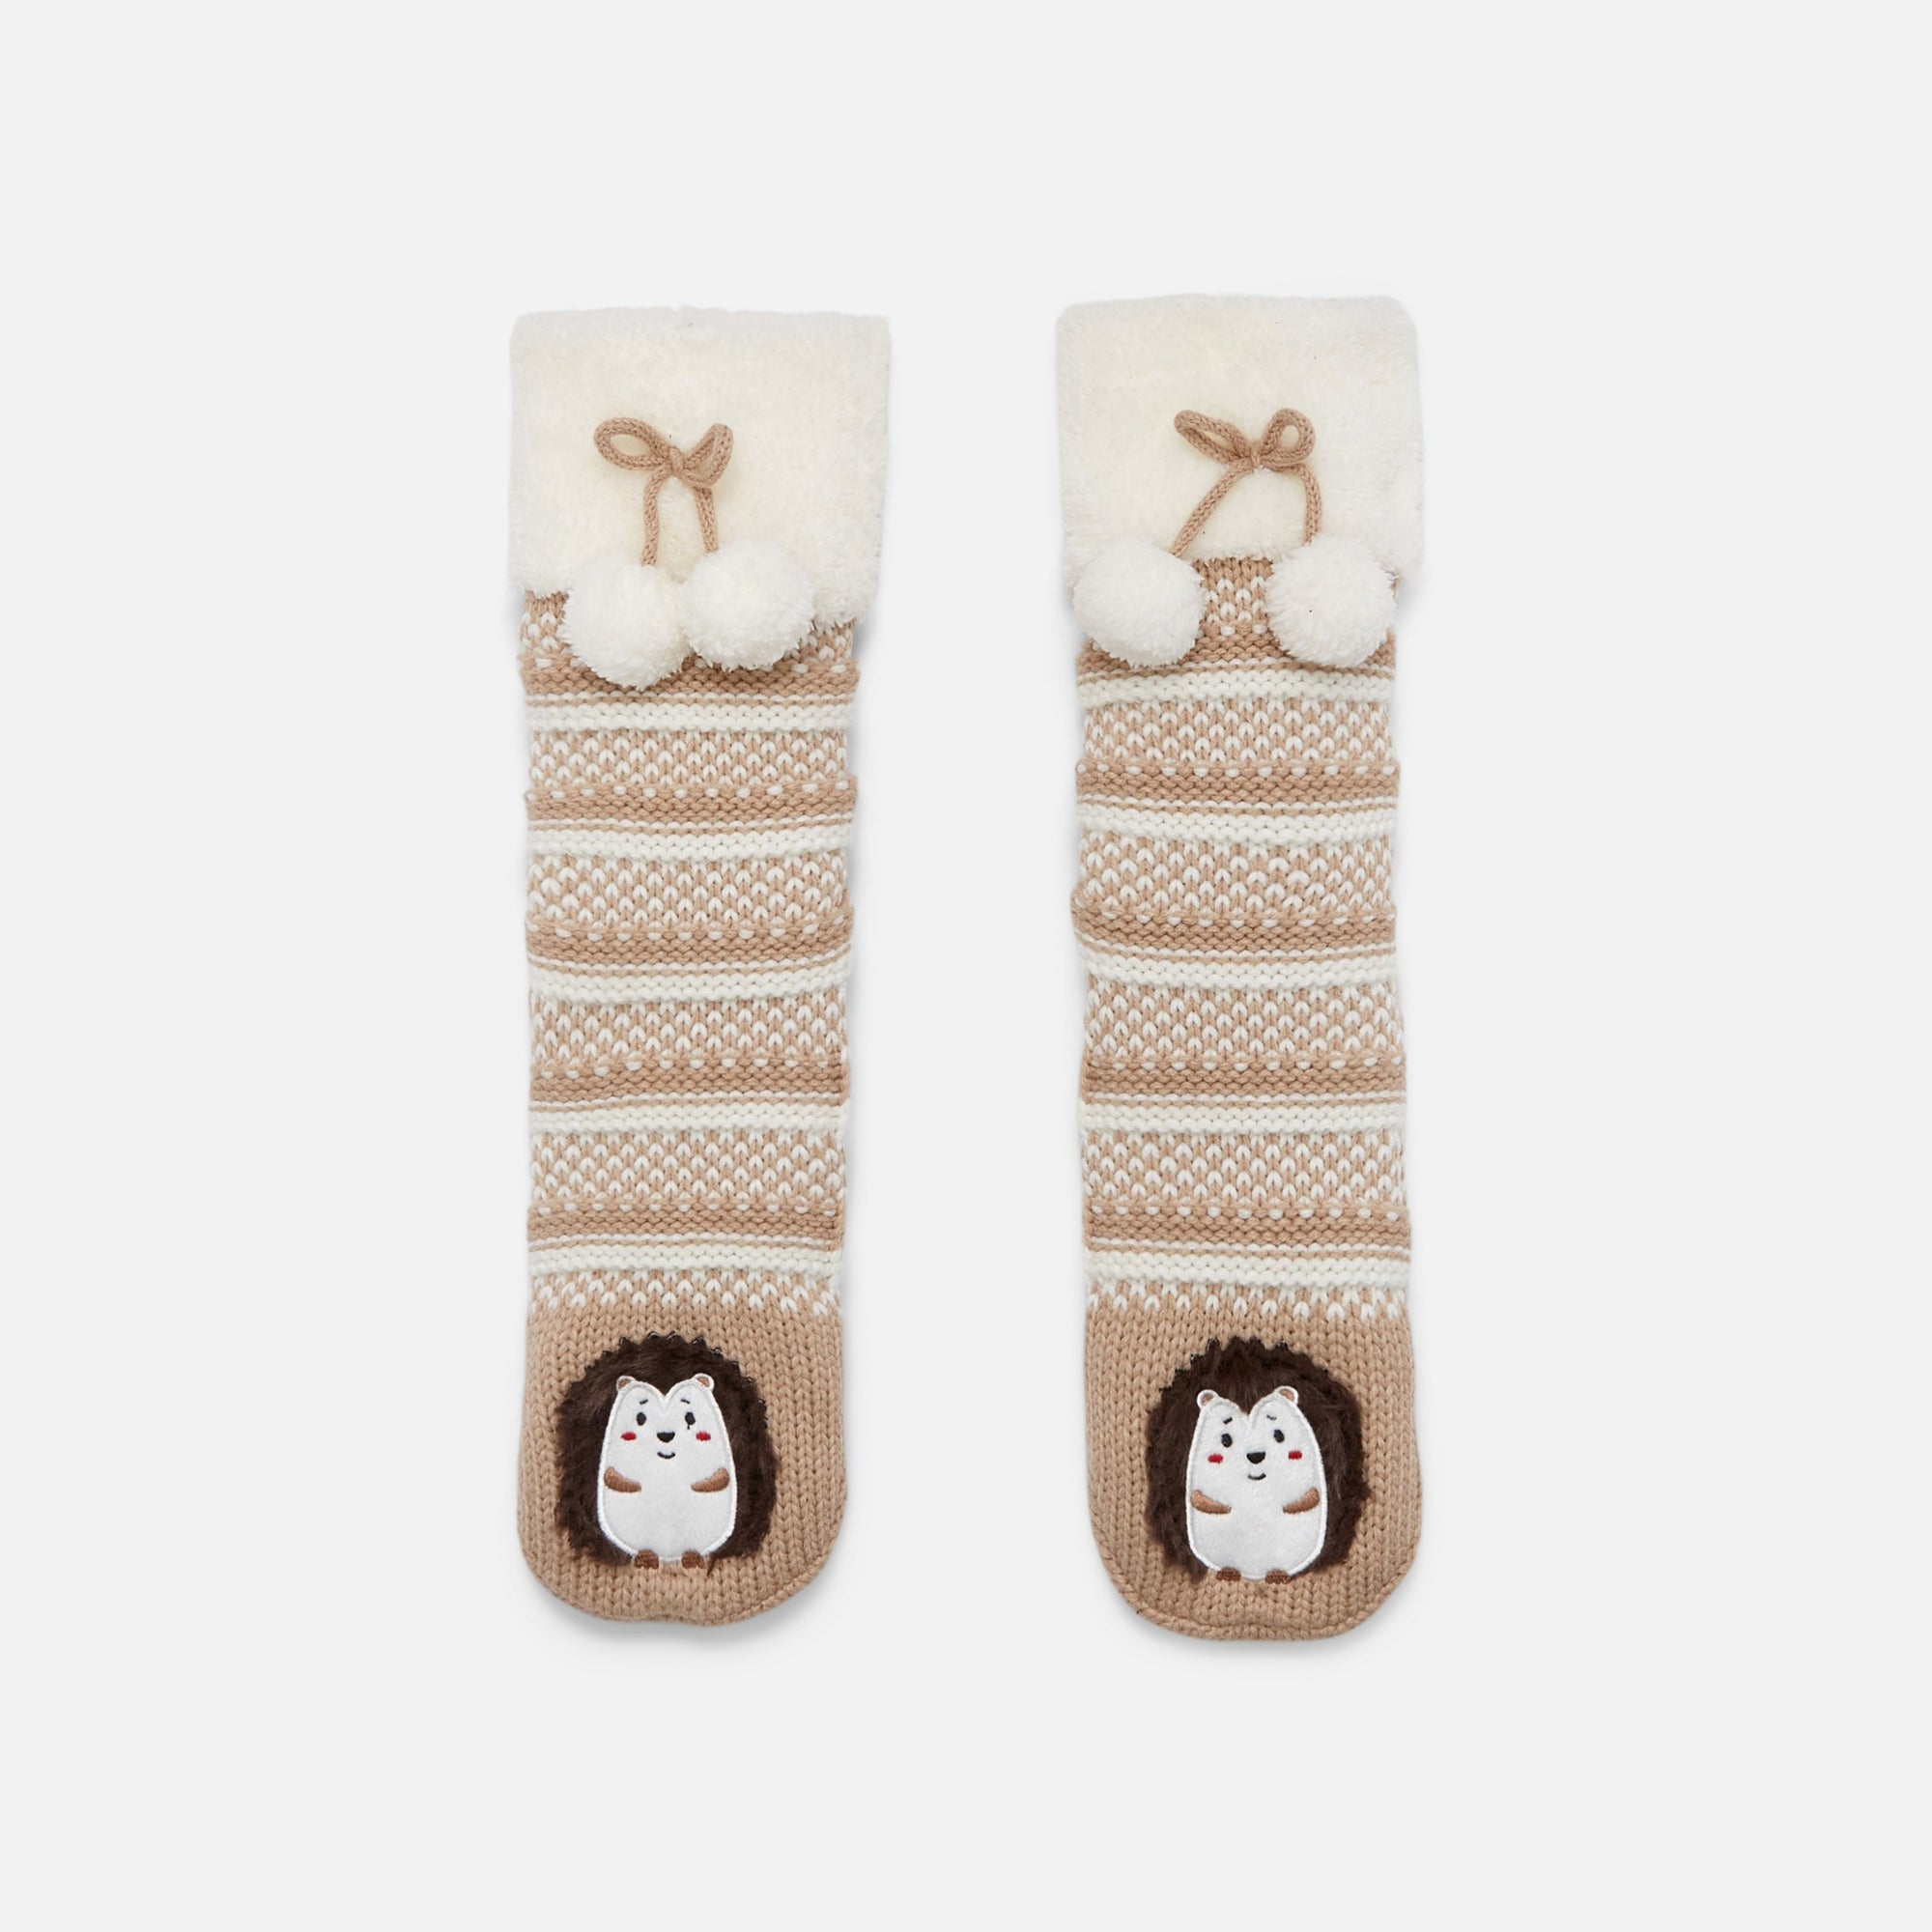 Beige slipper socks with hedgehog